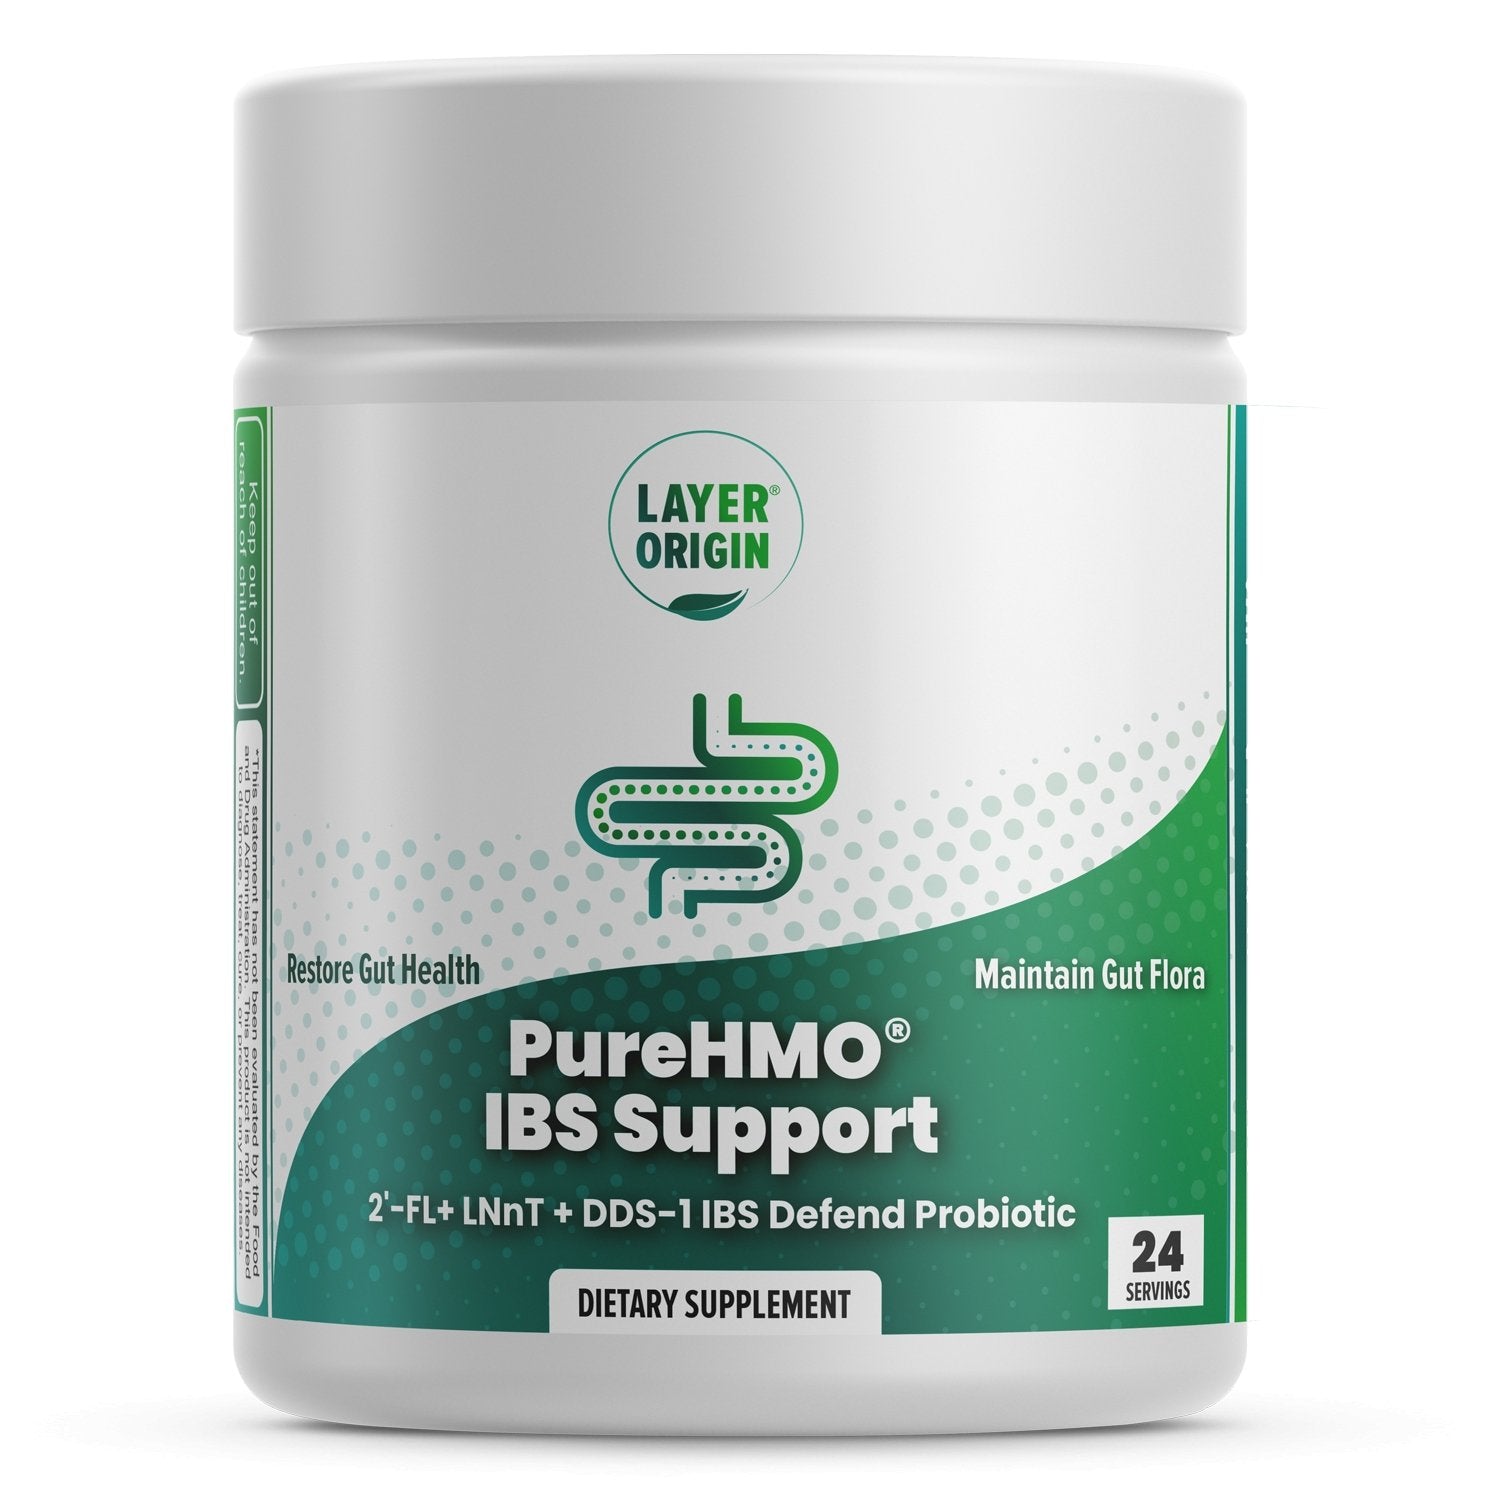 PureHMO IBS Support - 24 Servings | Layer Origin